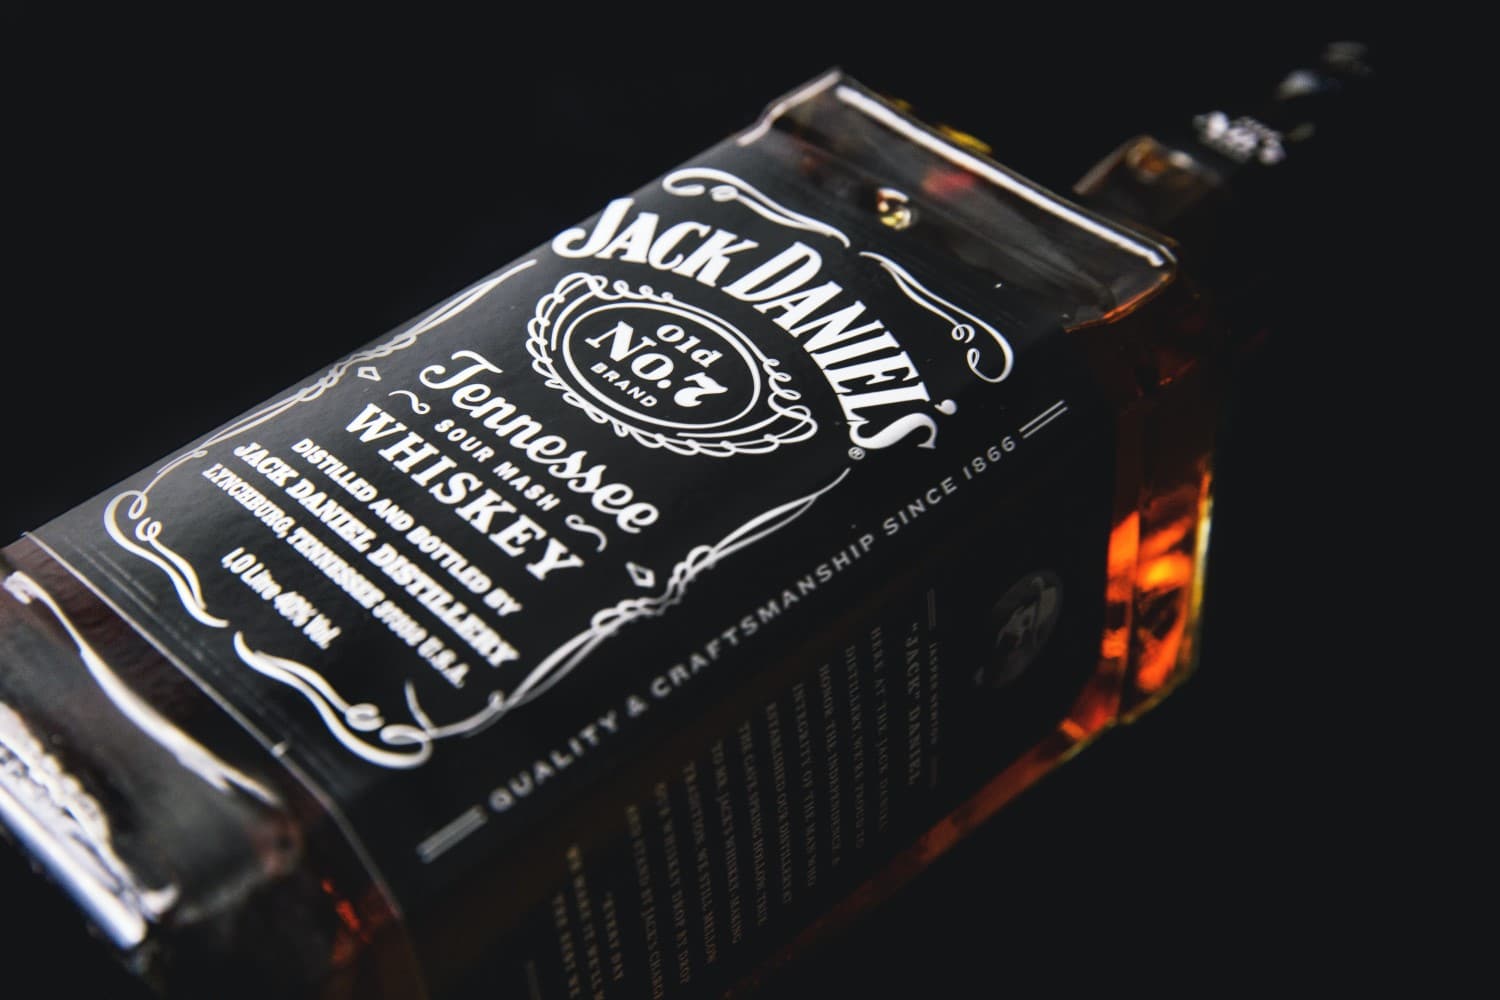 A bottle of Jack Daniels laid down